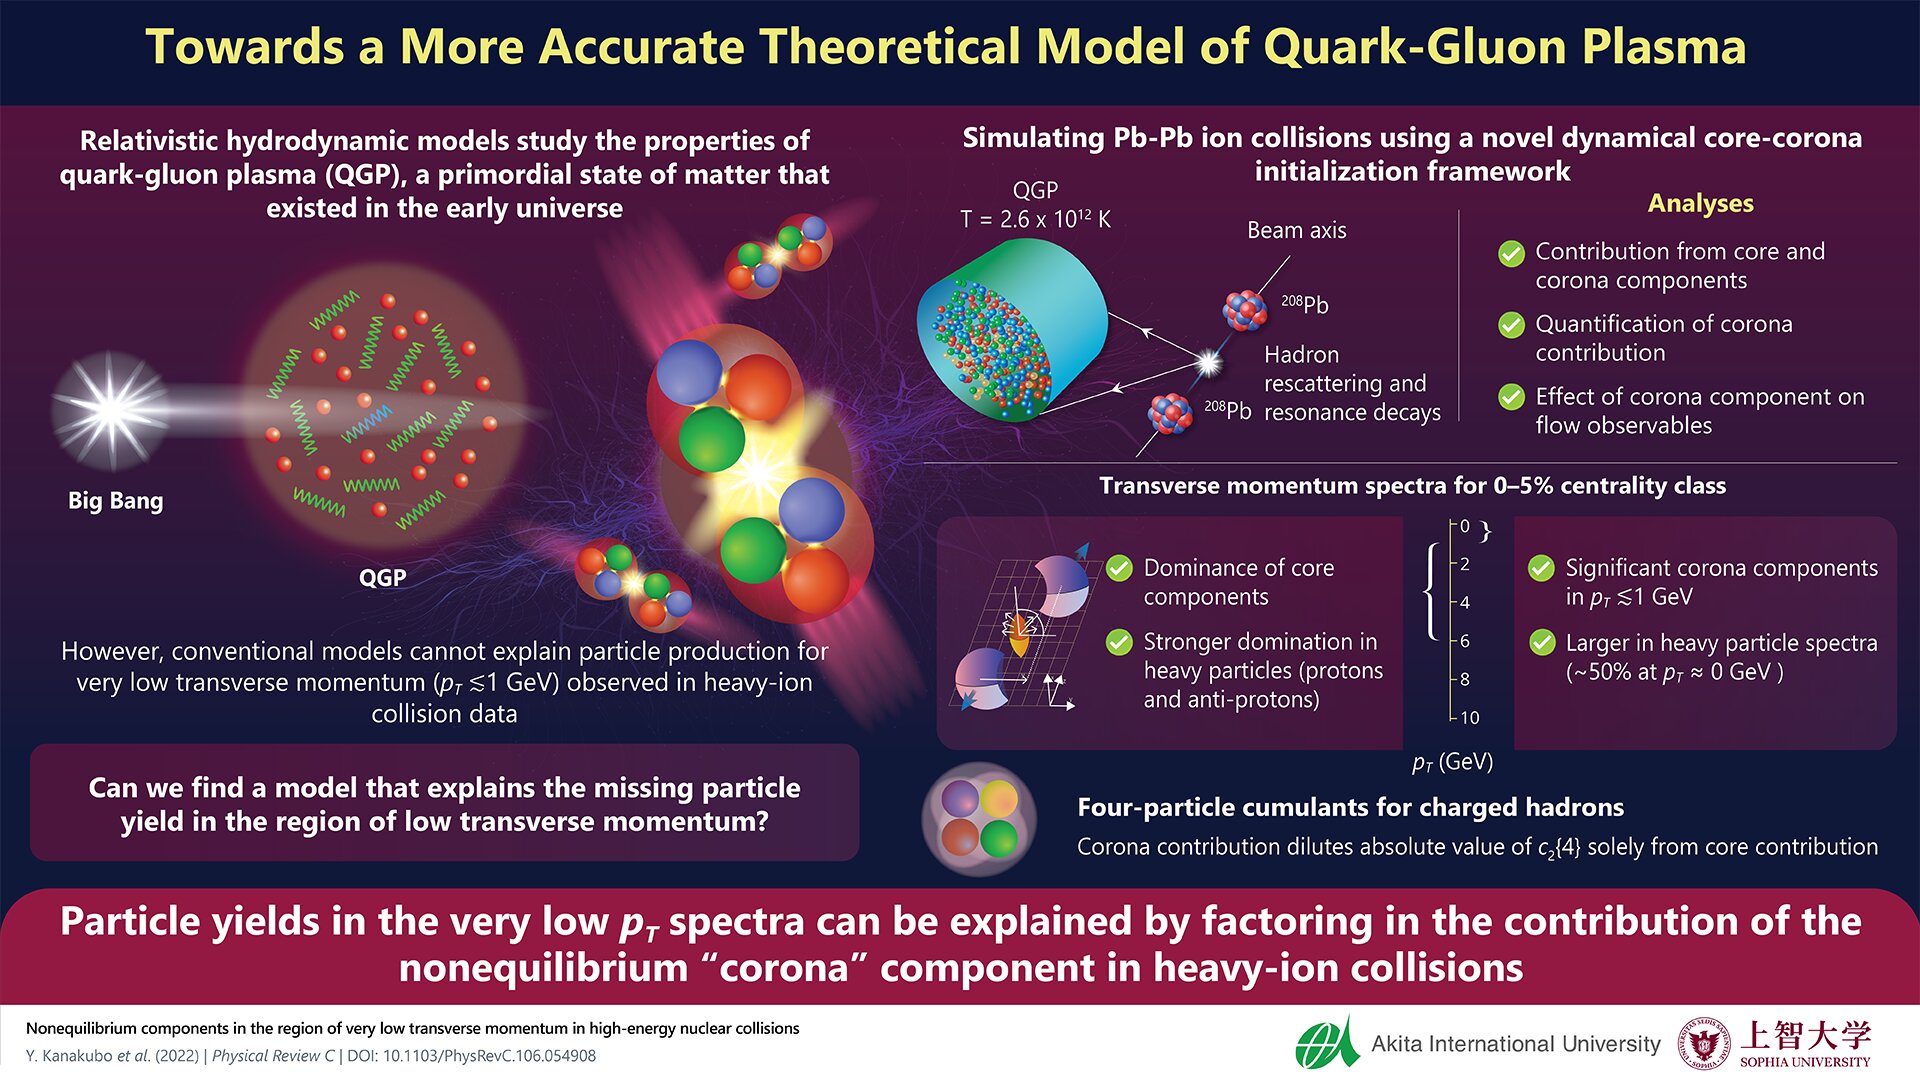 New model of quark-gluon plasma solves a long-standing discrepancy